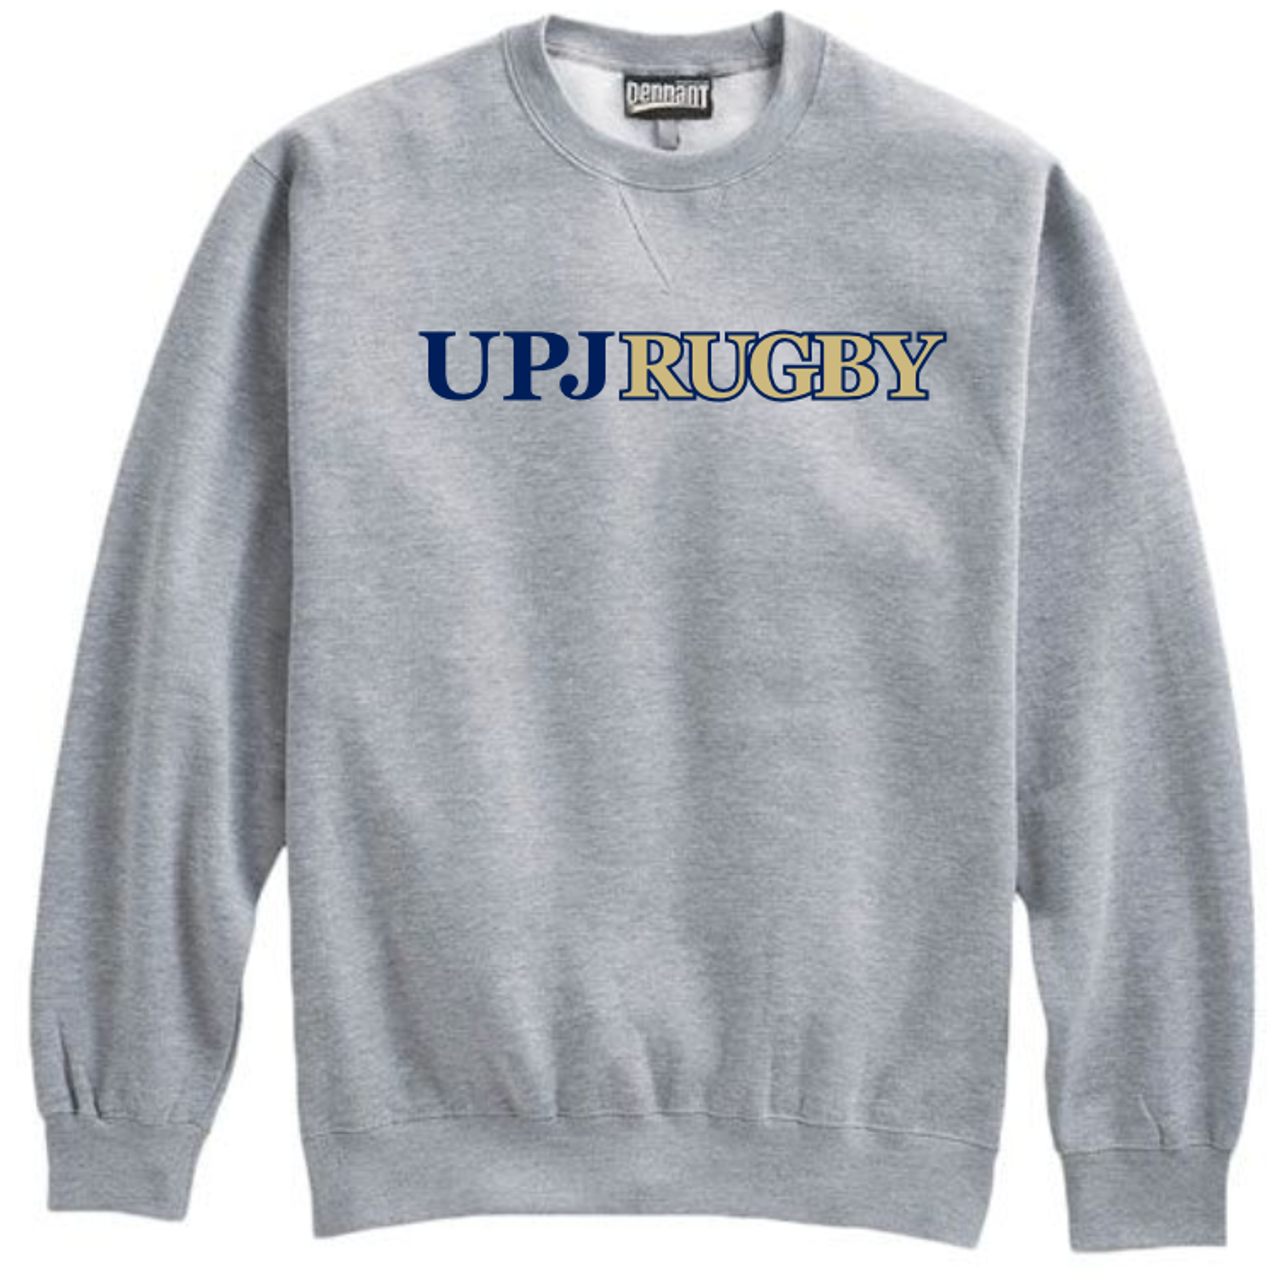 UPJ Rugby Crewneck Sweatshirt